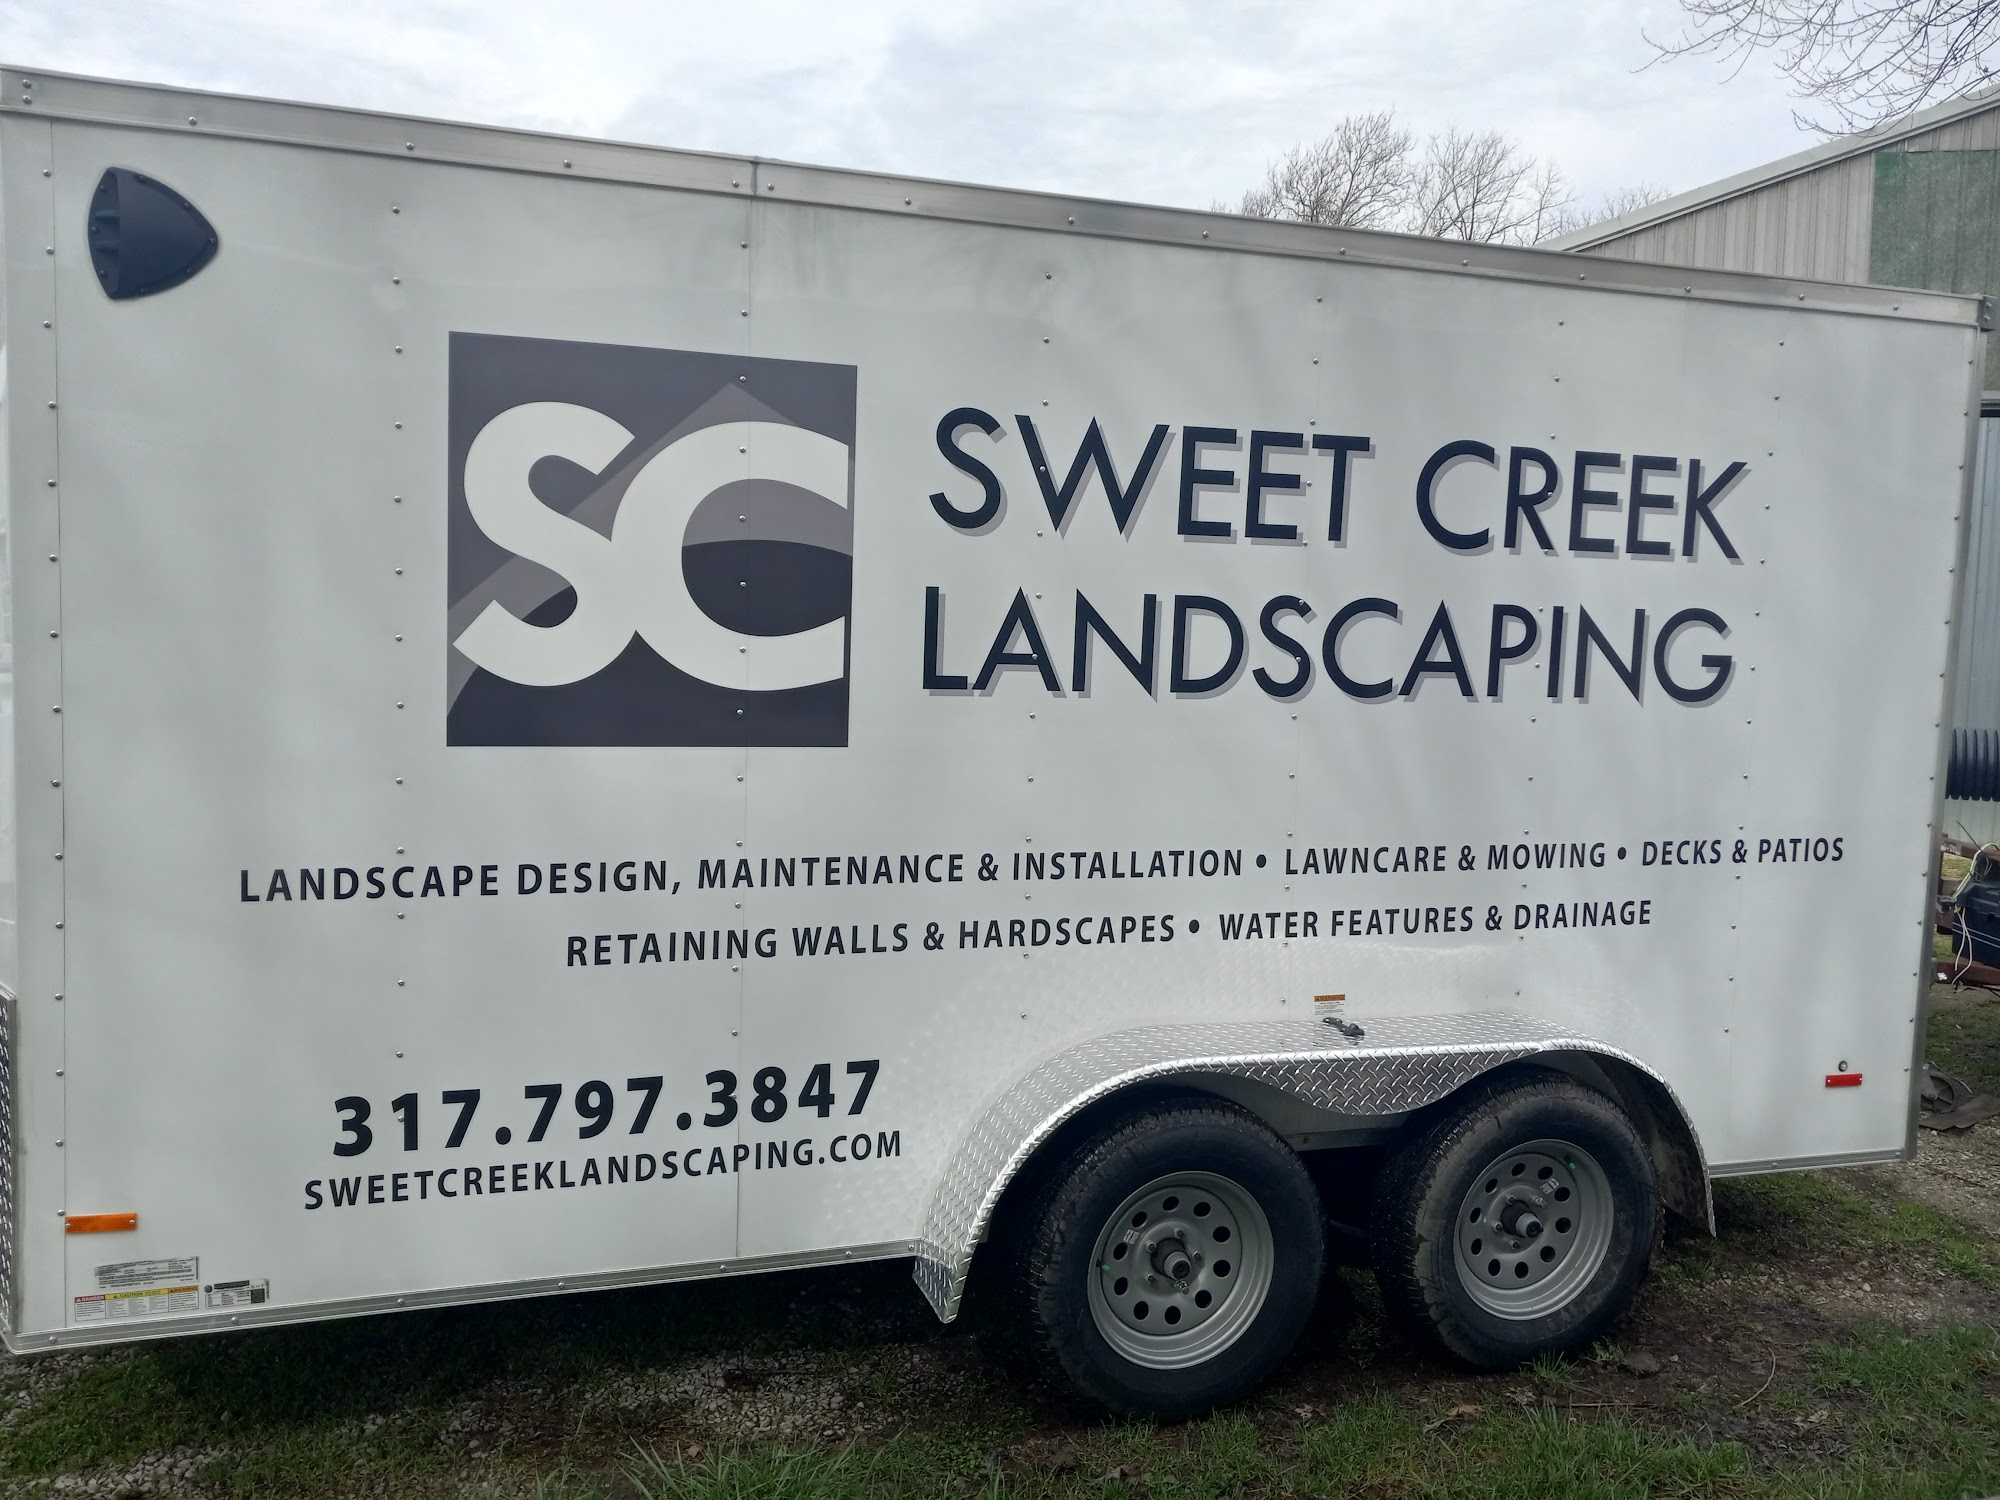 Sweet Creek Landscaping